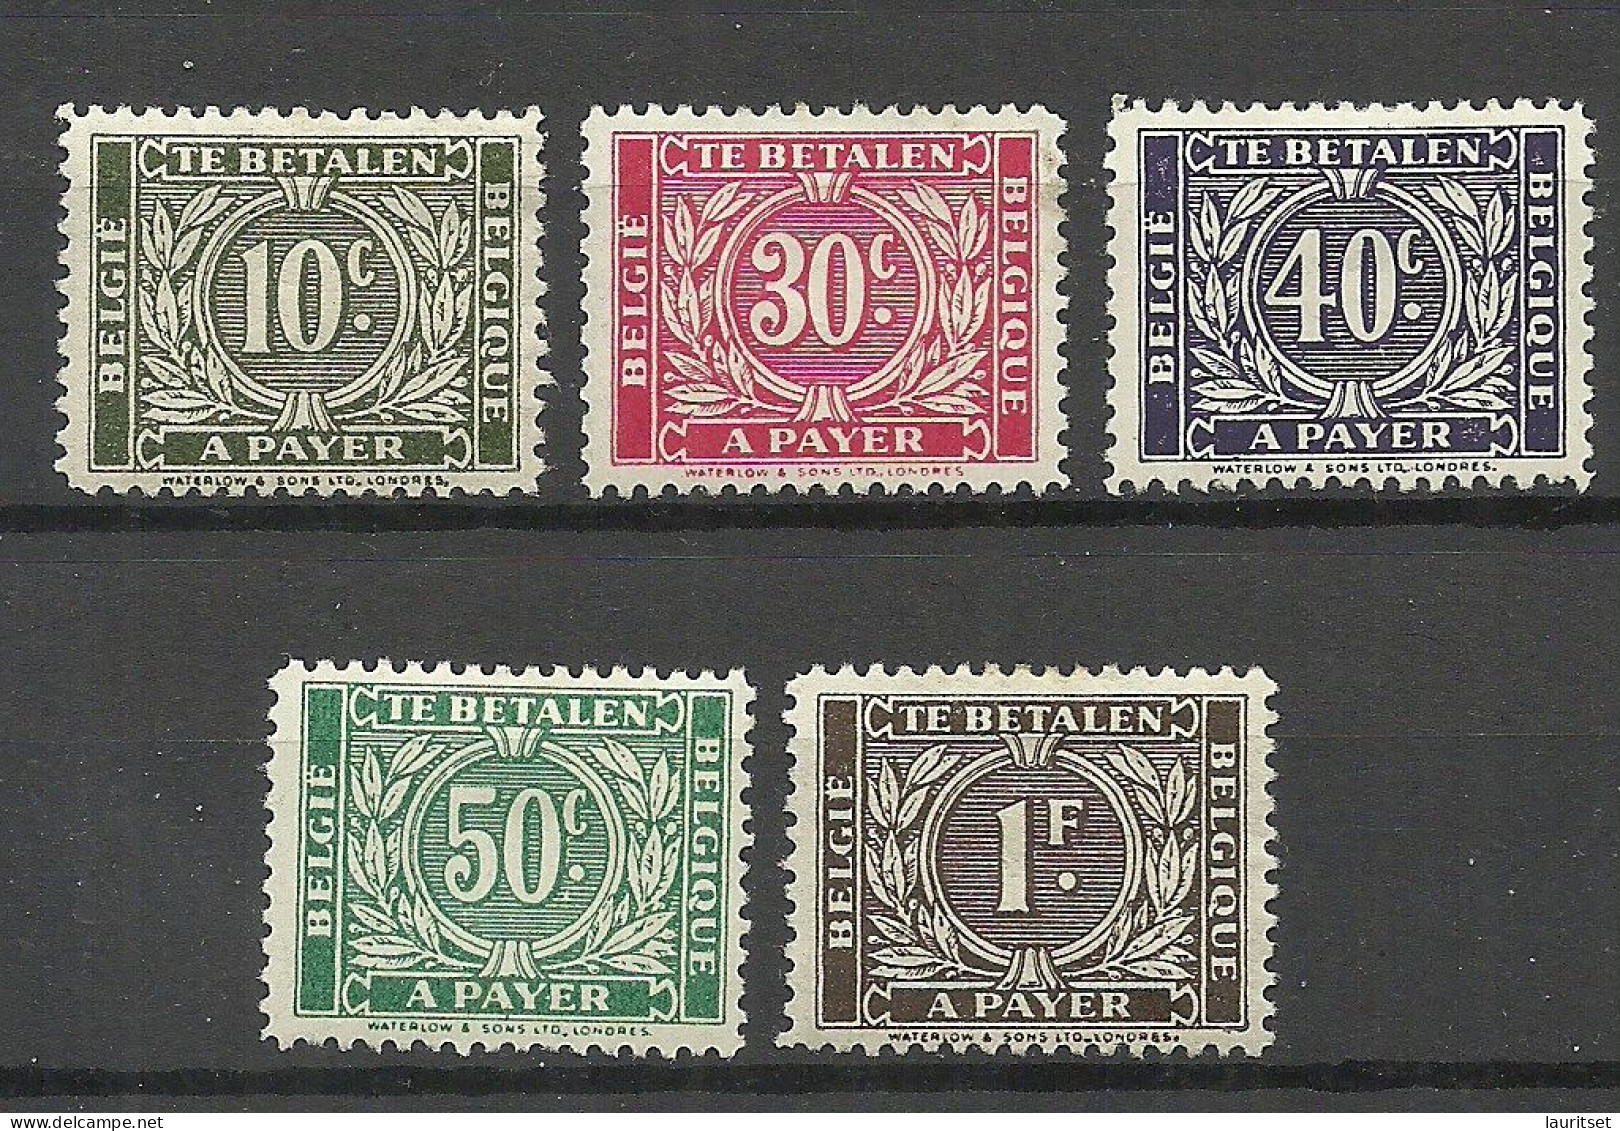 BELGIEN Belgium Belgique 1945 =5 Values From Set Michel 49 - 45 A Payer Te Betalen Portomarken Postage Due * - Postzegels